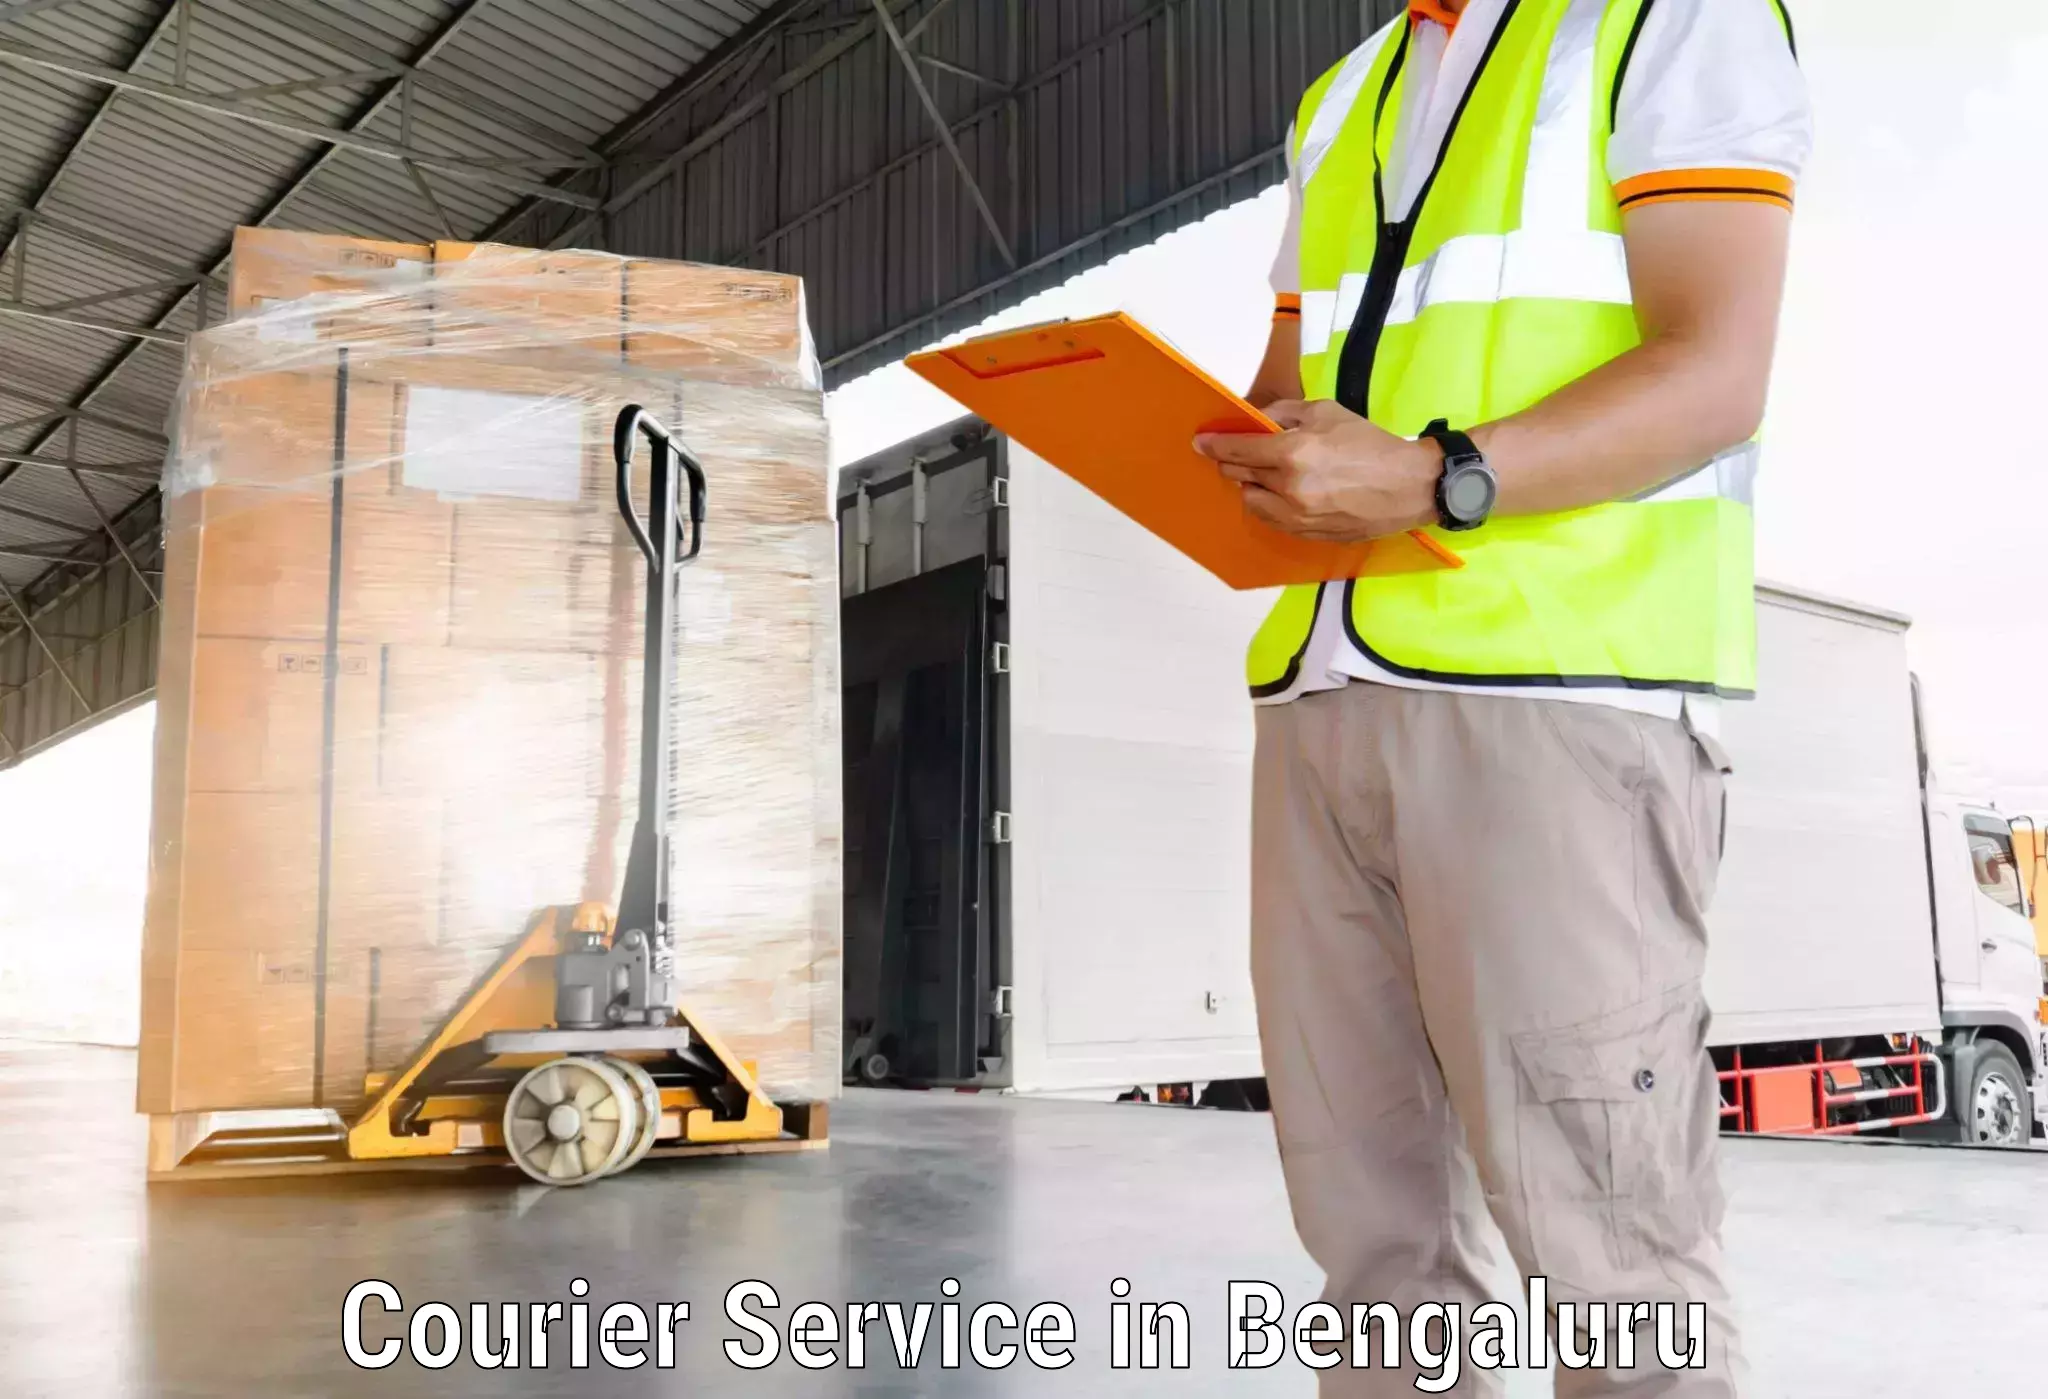 Logistics and distribution in Bengaluru